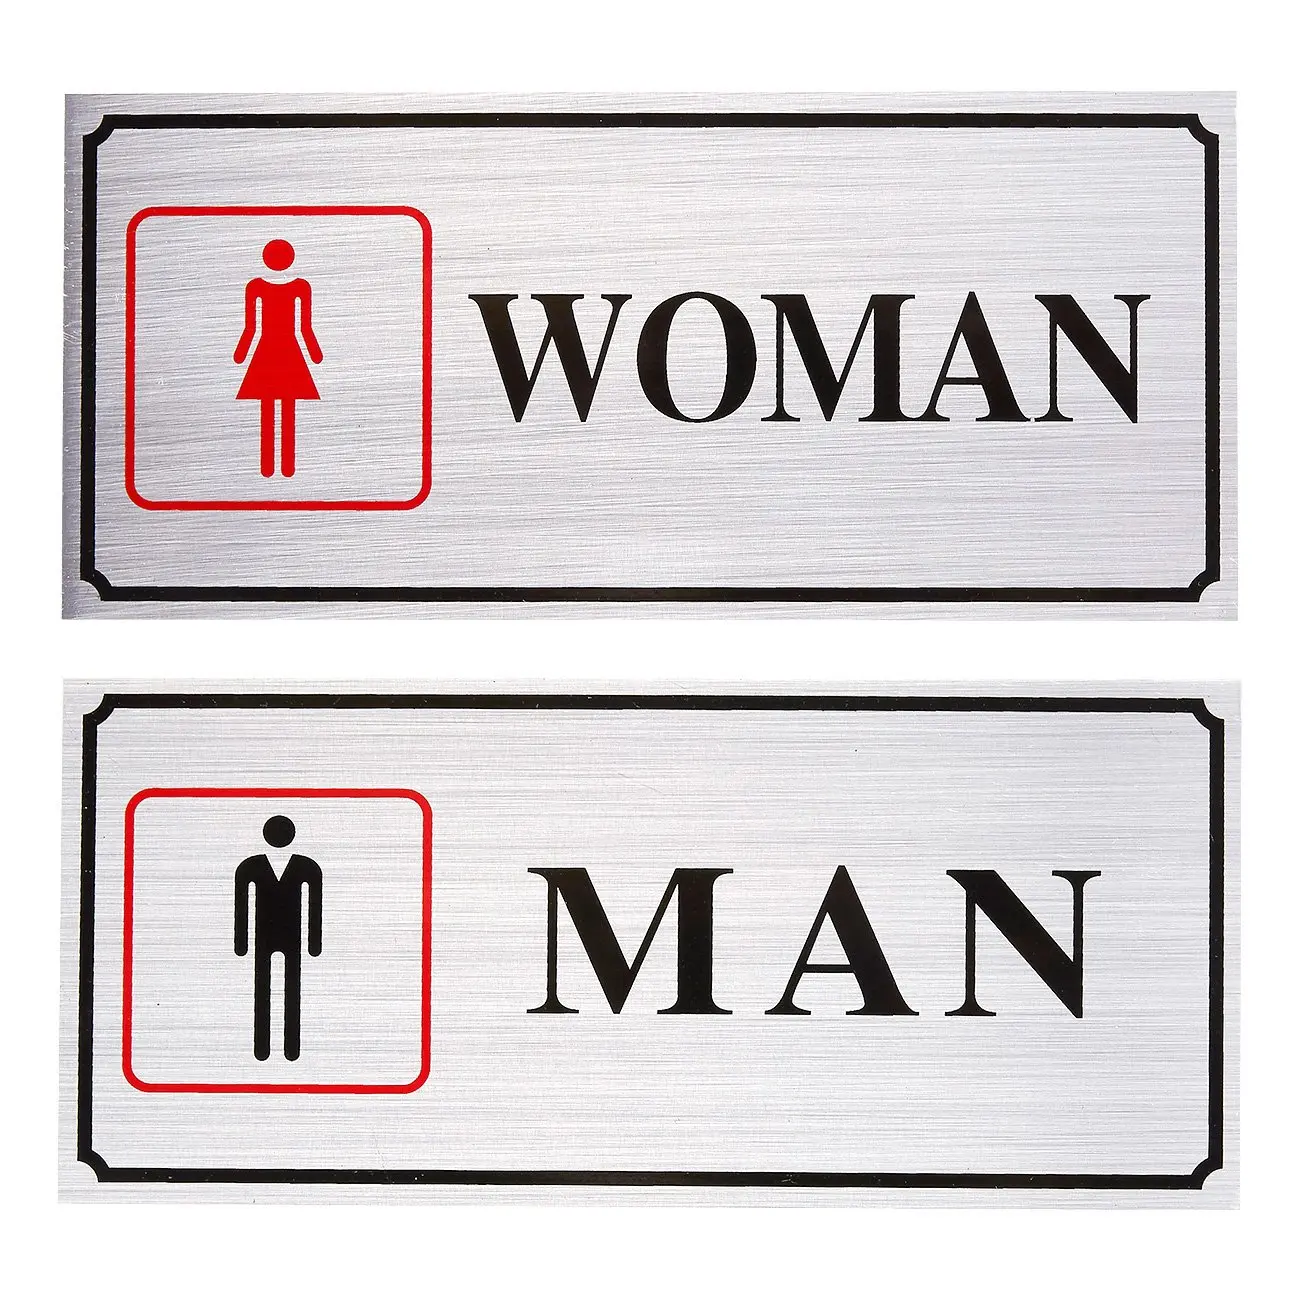 Cheap Men Women Restroom Signs Find Men Women Restroom Signs Deals On Line At